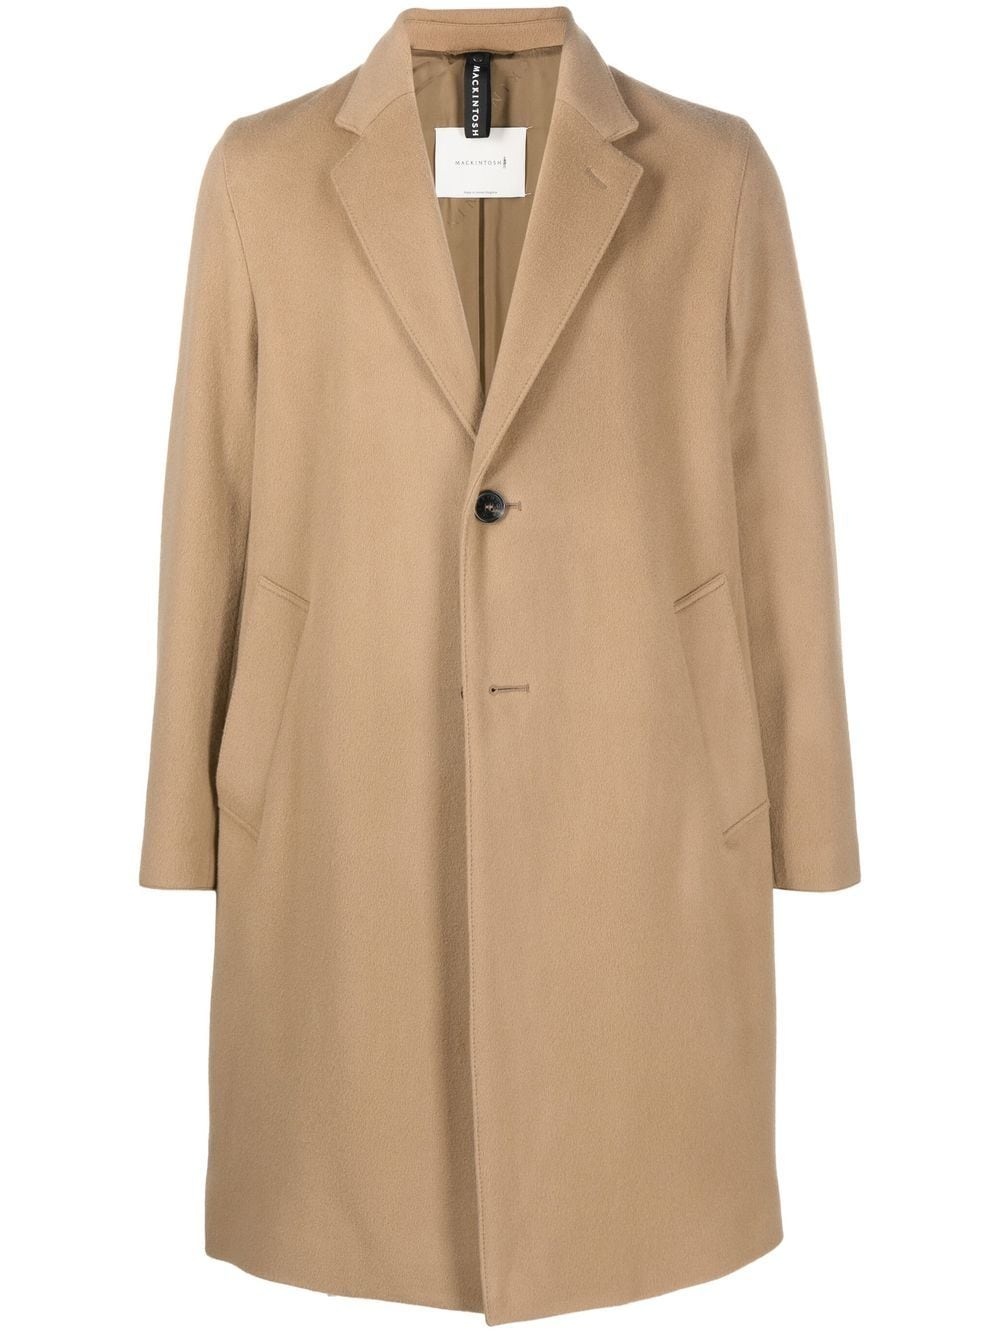 NEW STANLEY Beige Wool & Cashmere Coat - 1